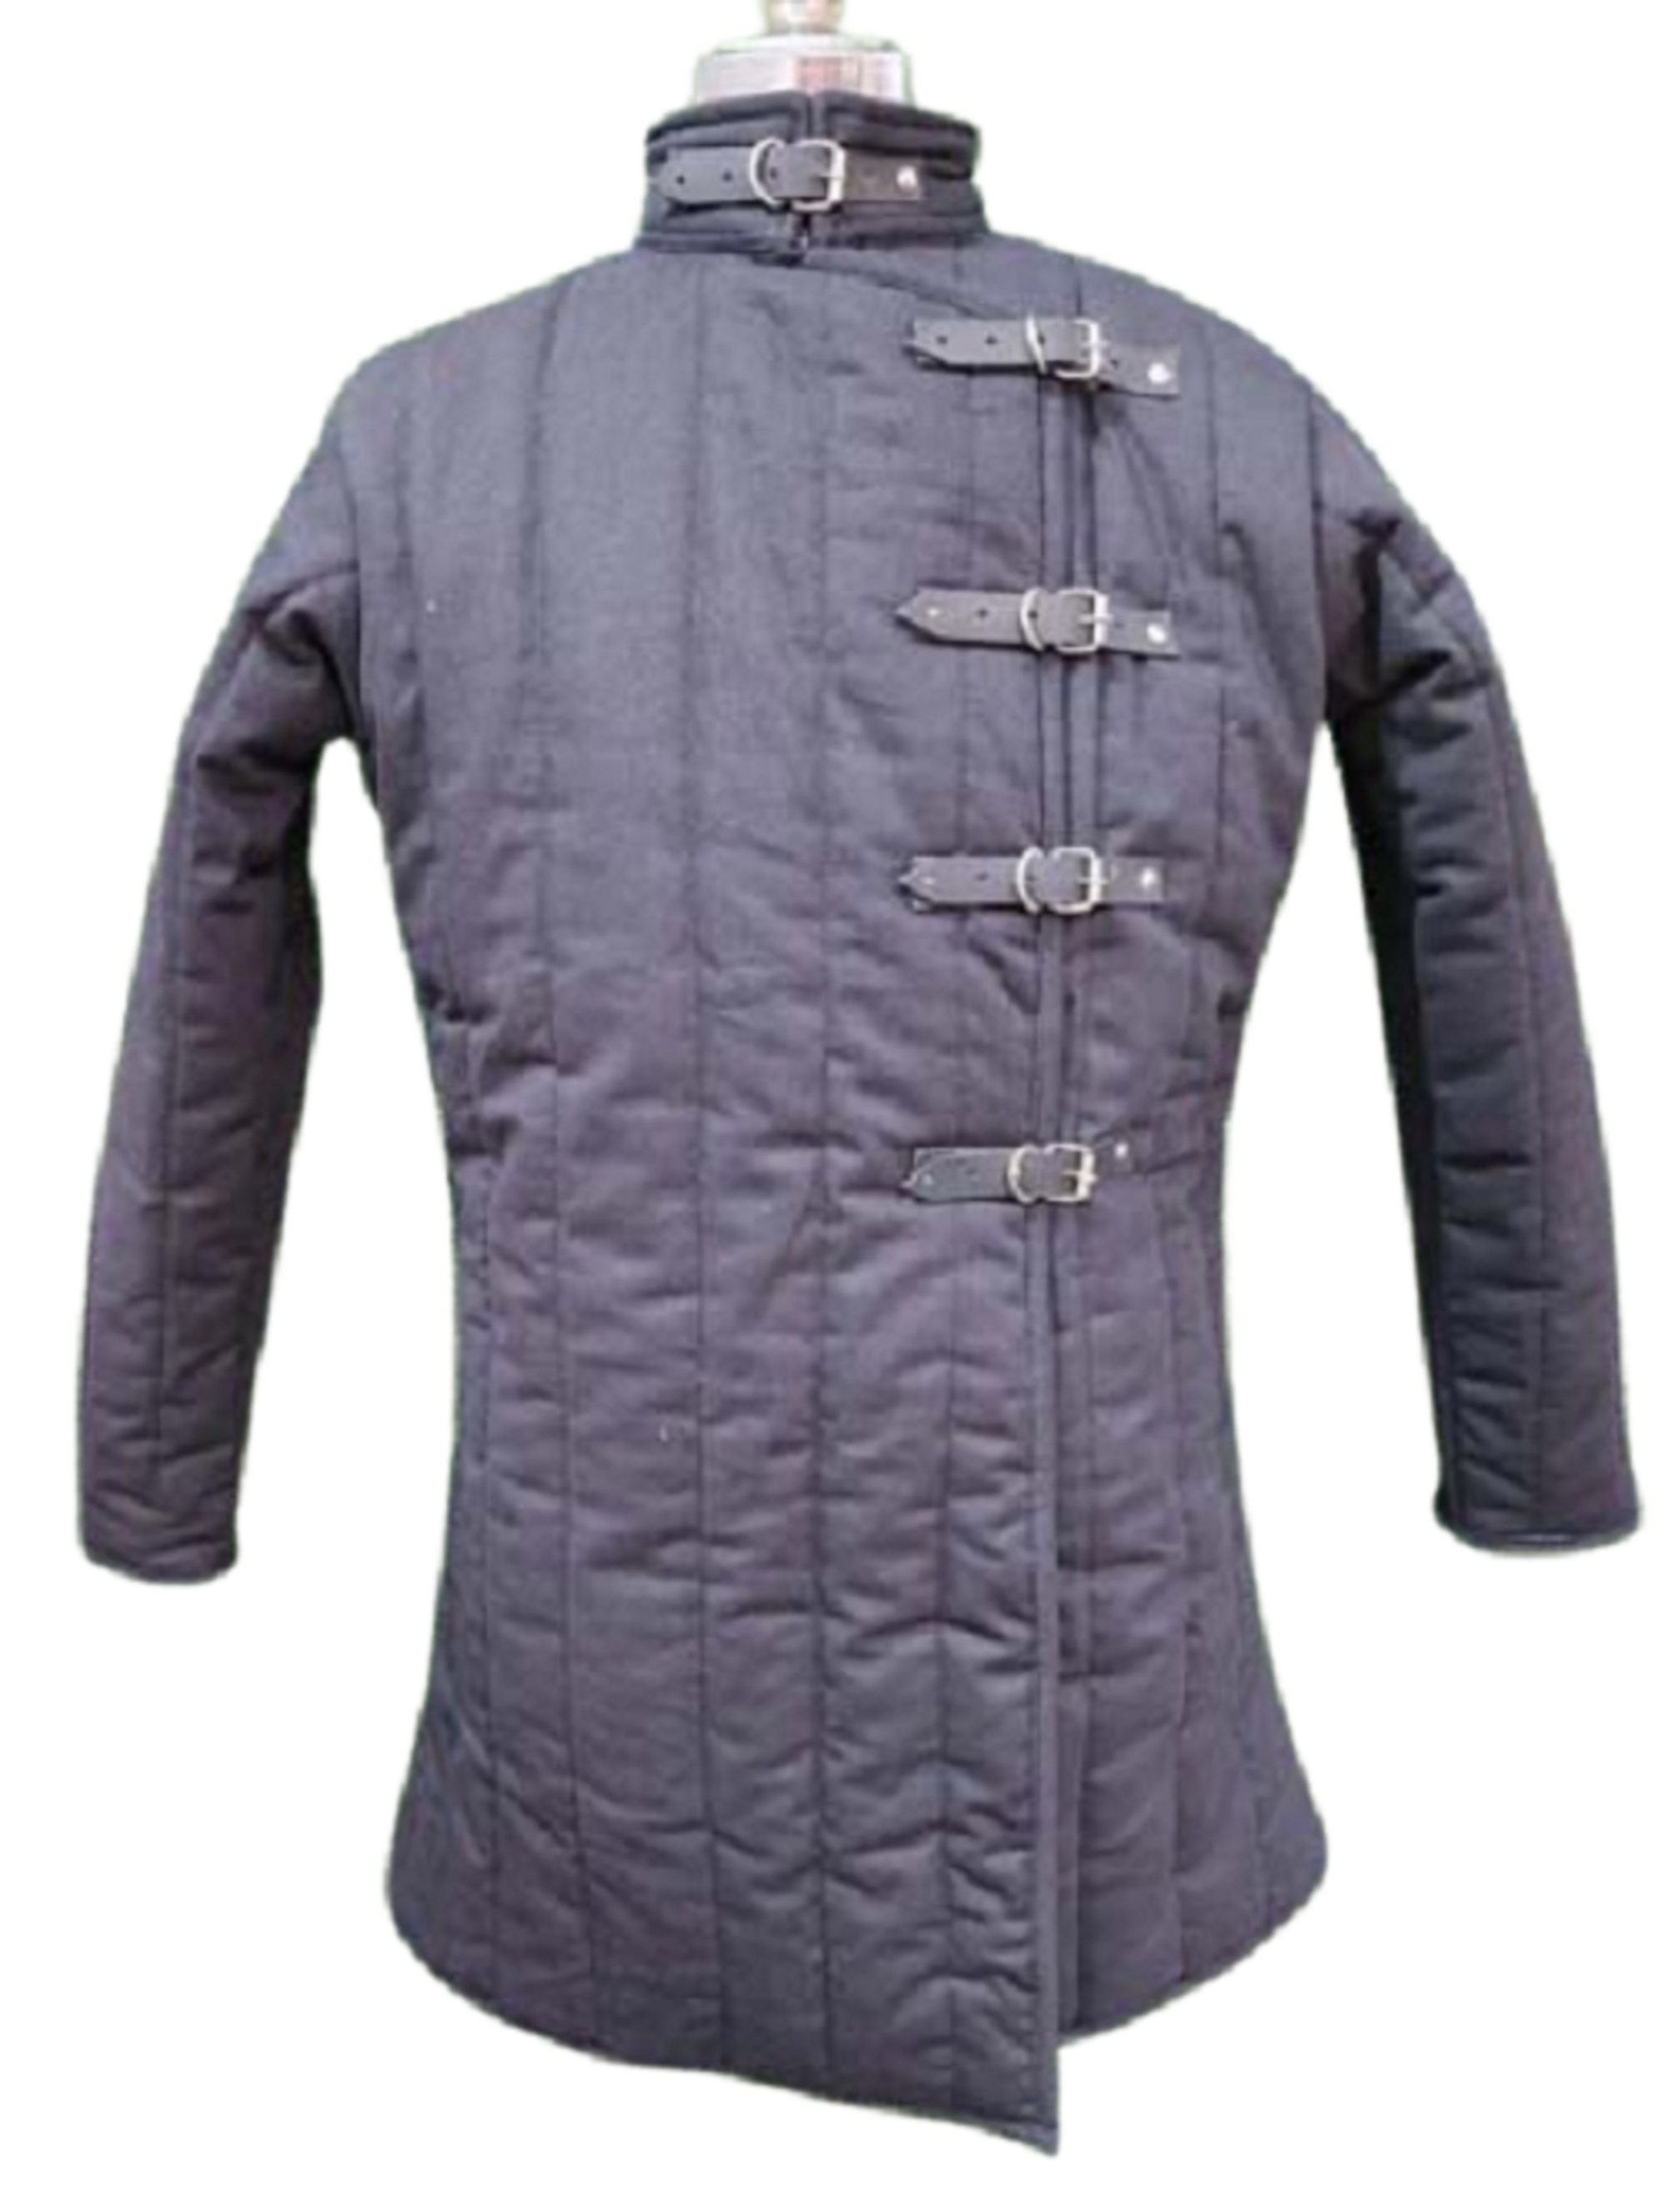 New jacket 350N : r/wma